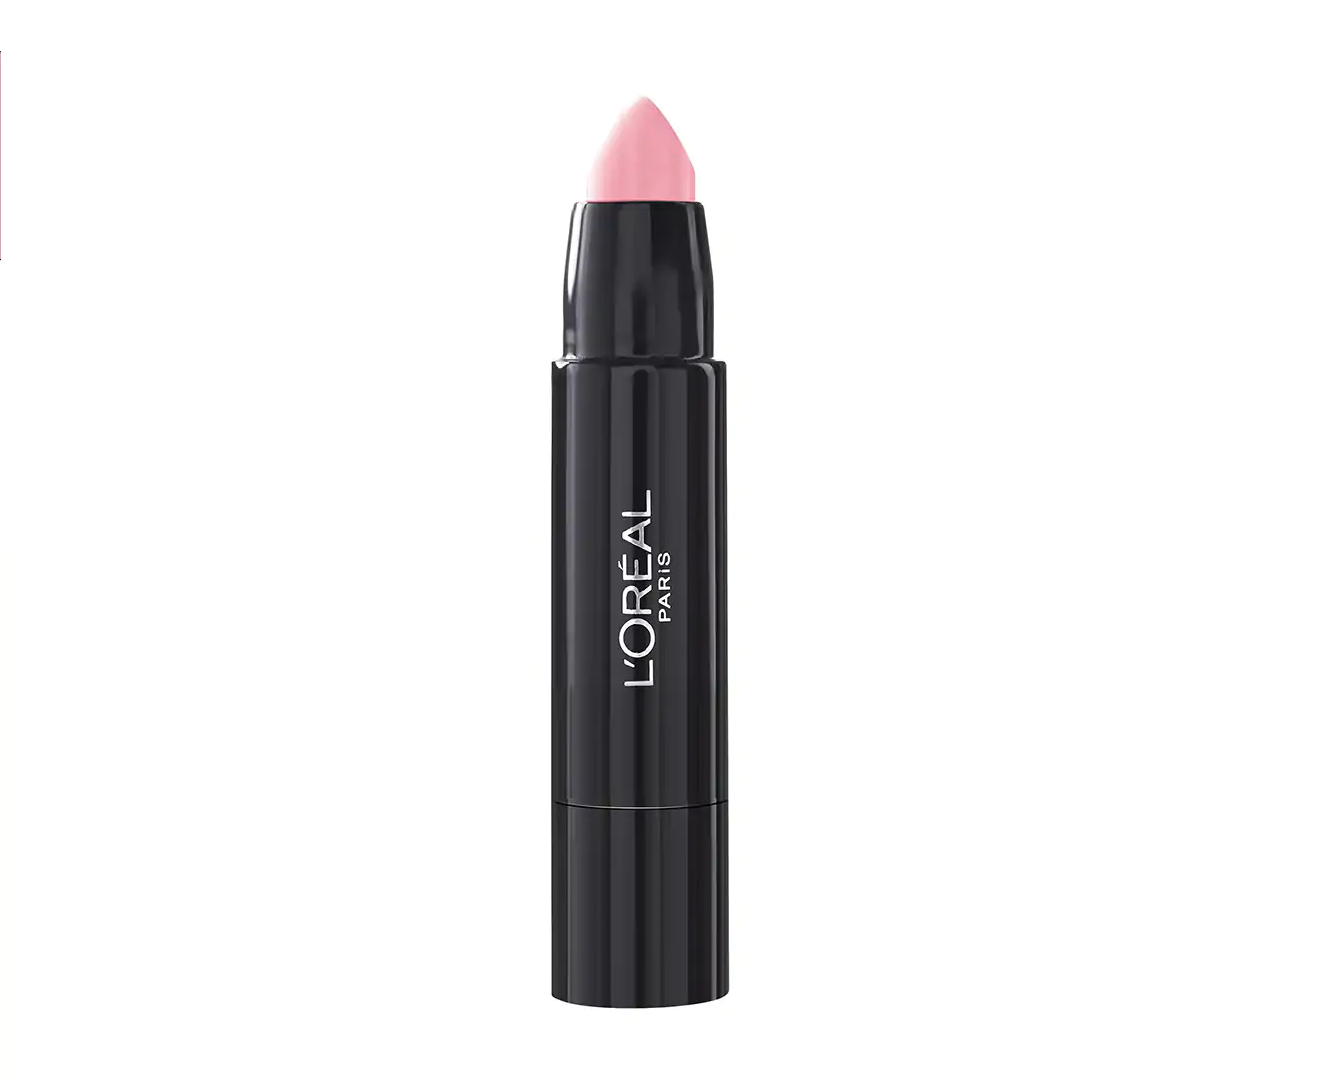 L'OREAL Paris Infallible Sexy Balm Lipstick 15g - #101 We Wear Pink